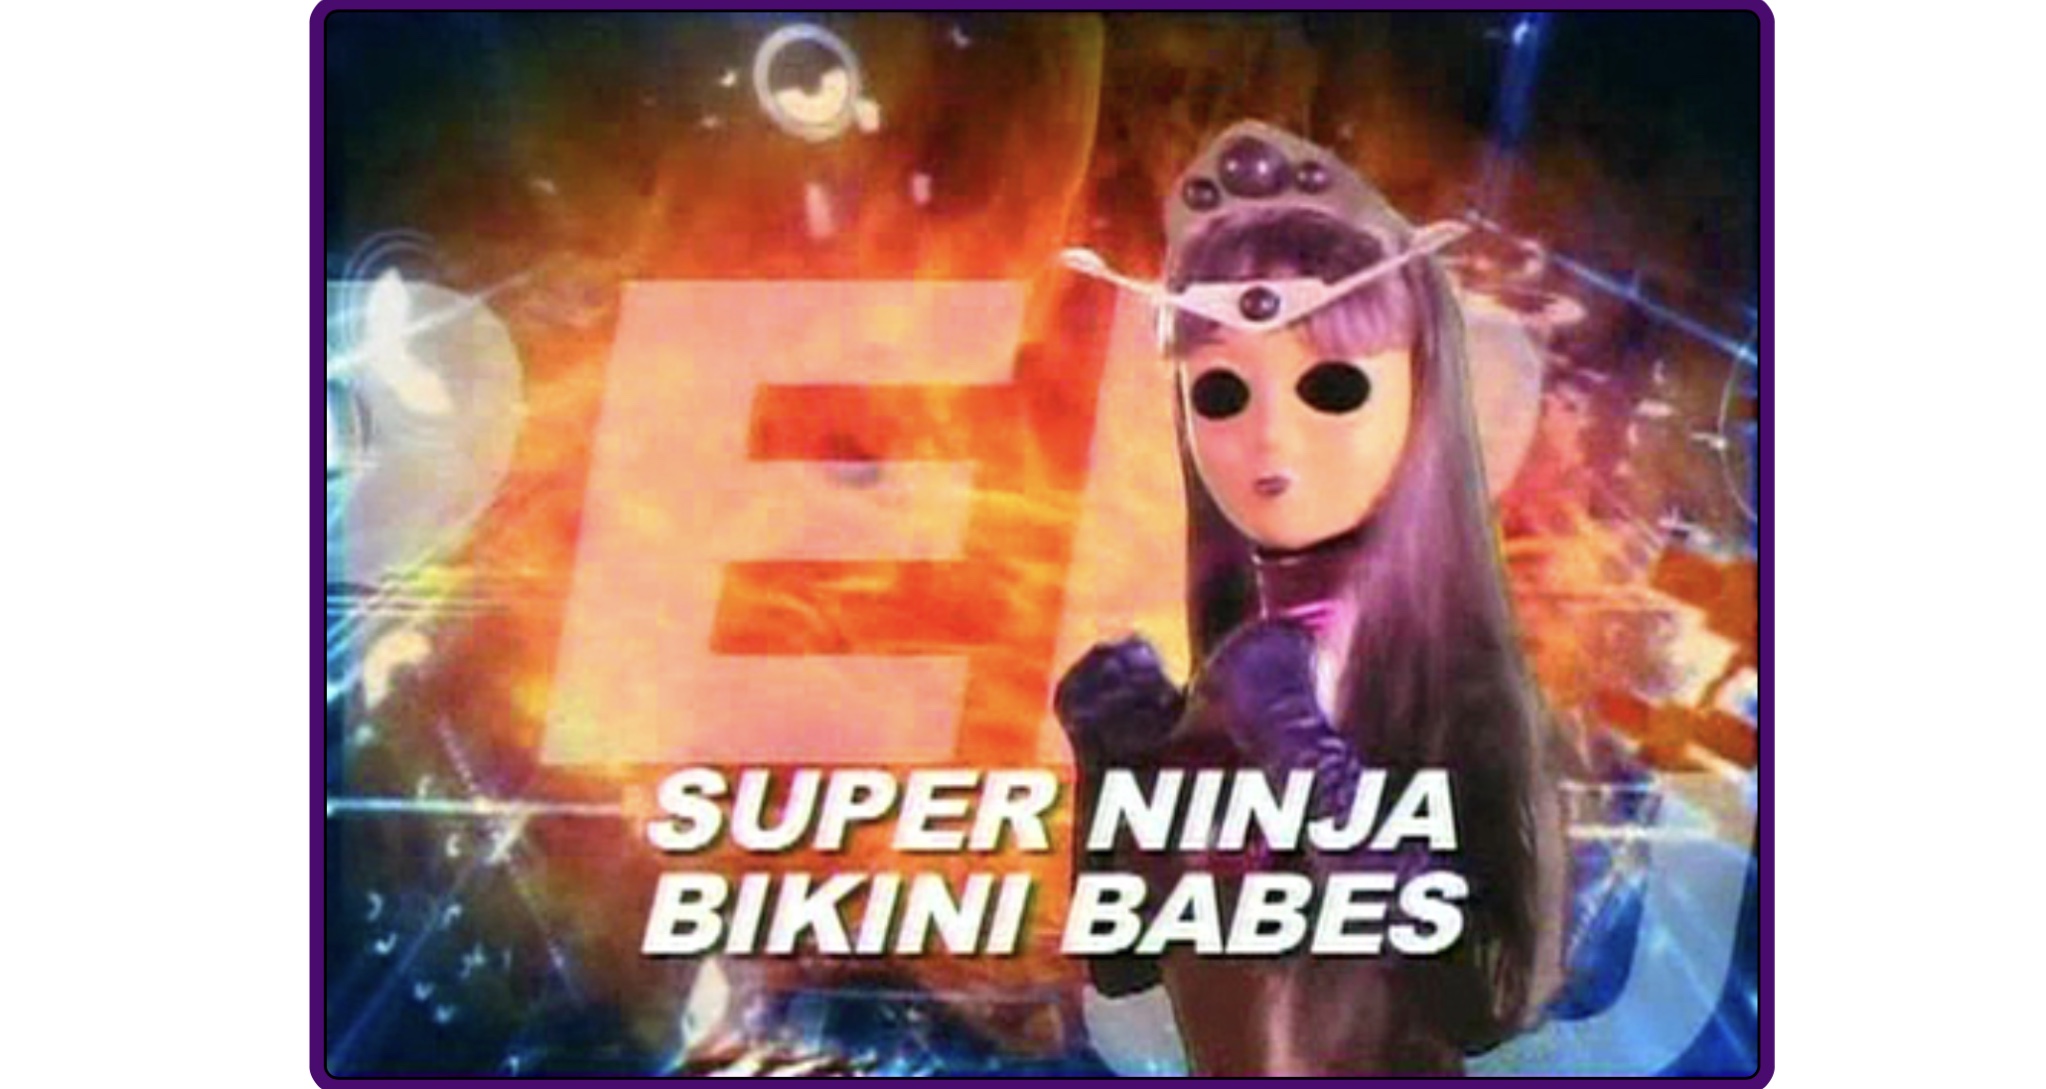 chris dotzert recommends Super Ninja Doll Movie